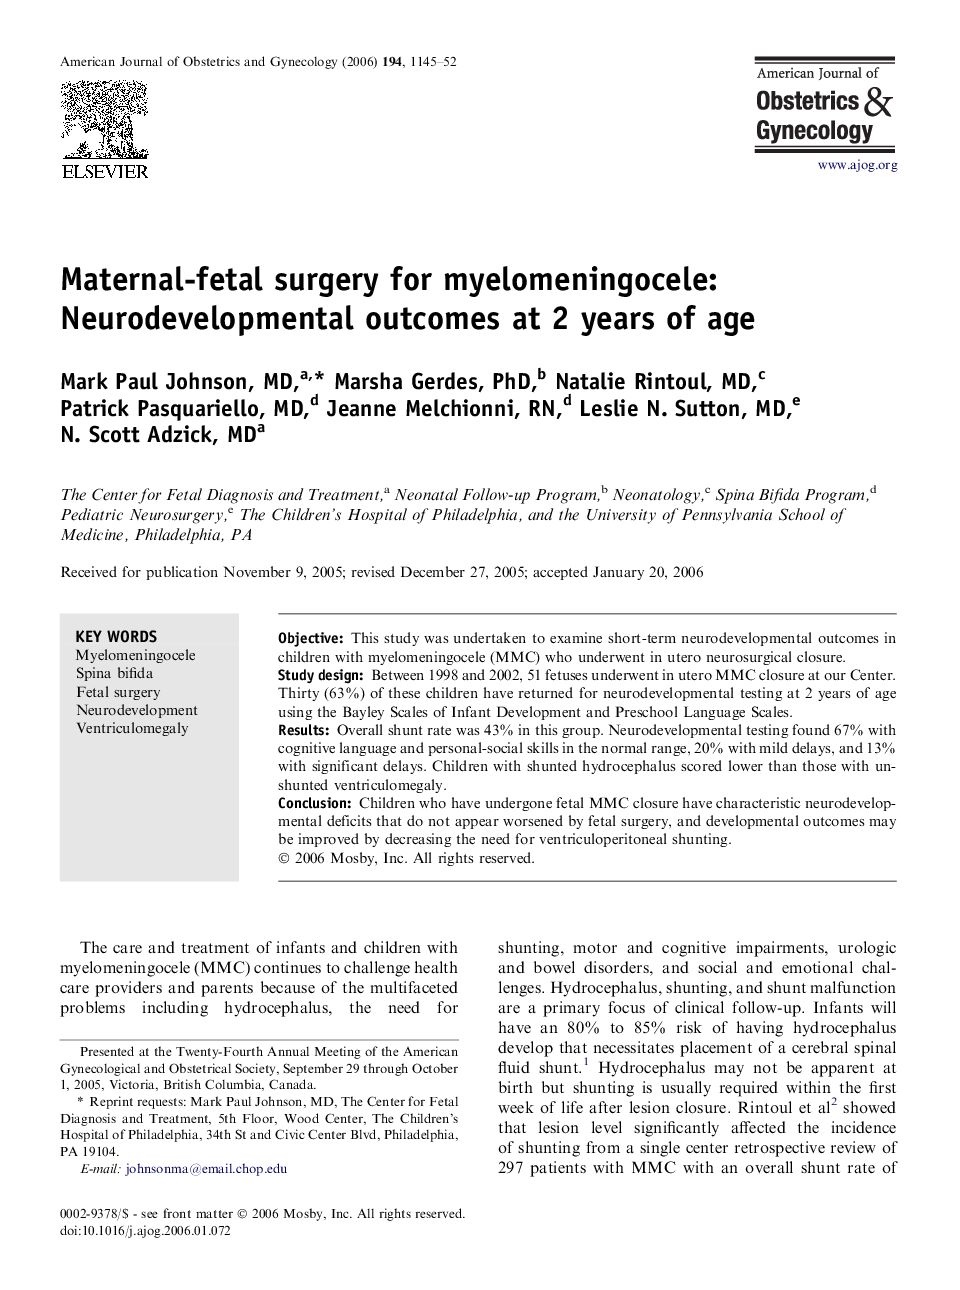 Maternal-fetal surgery for myelomeningocele: Neurodevelopmental outcomes at 2 years of age 